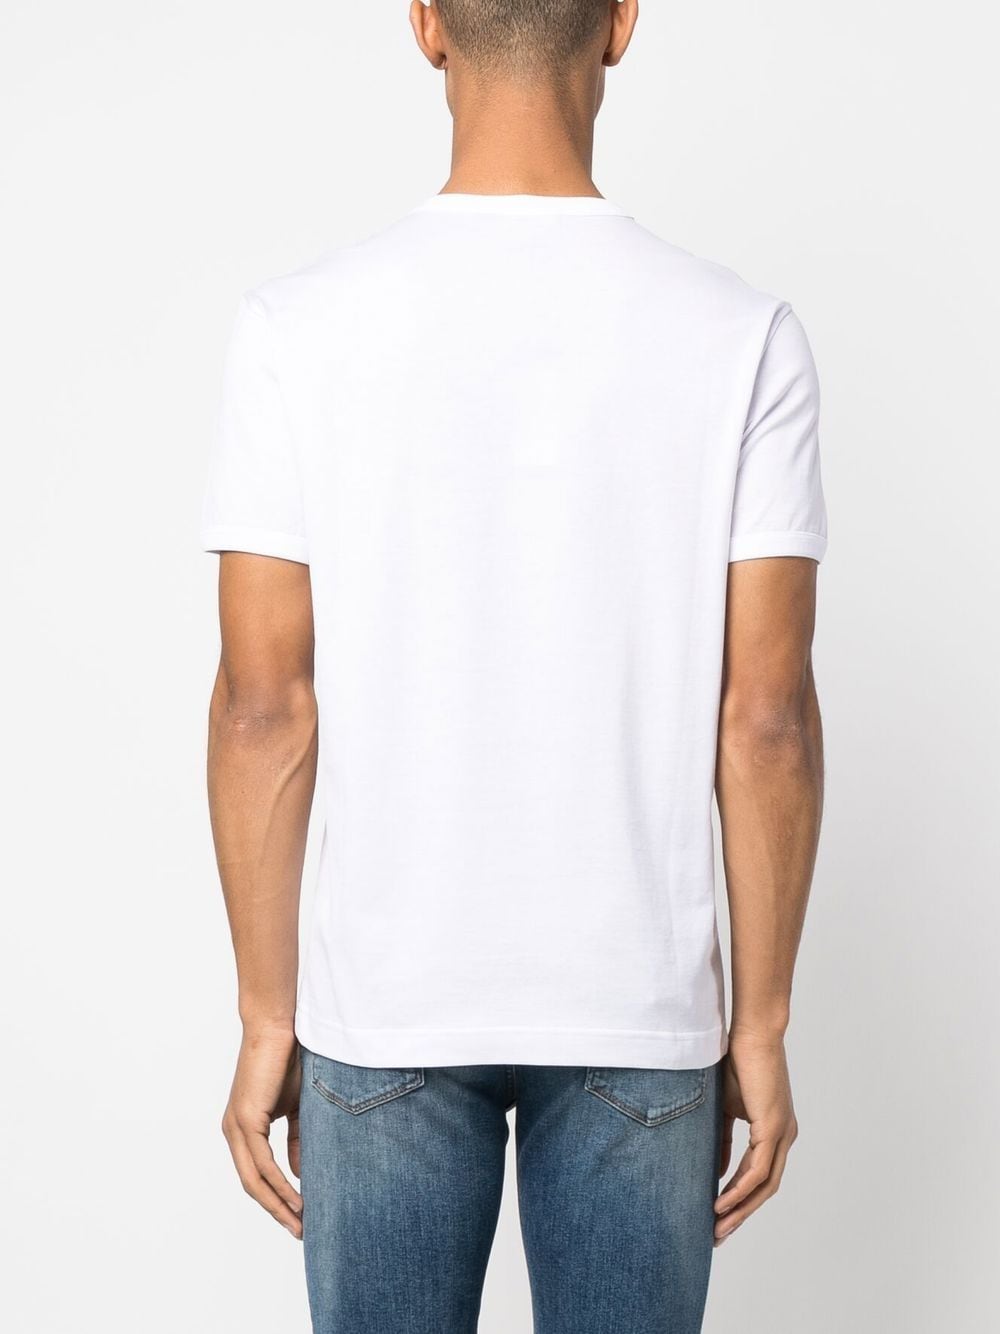 t-shirt blanc à logo couronne